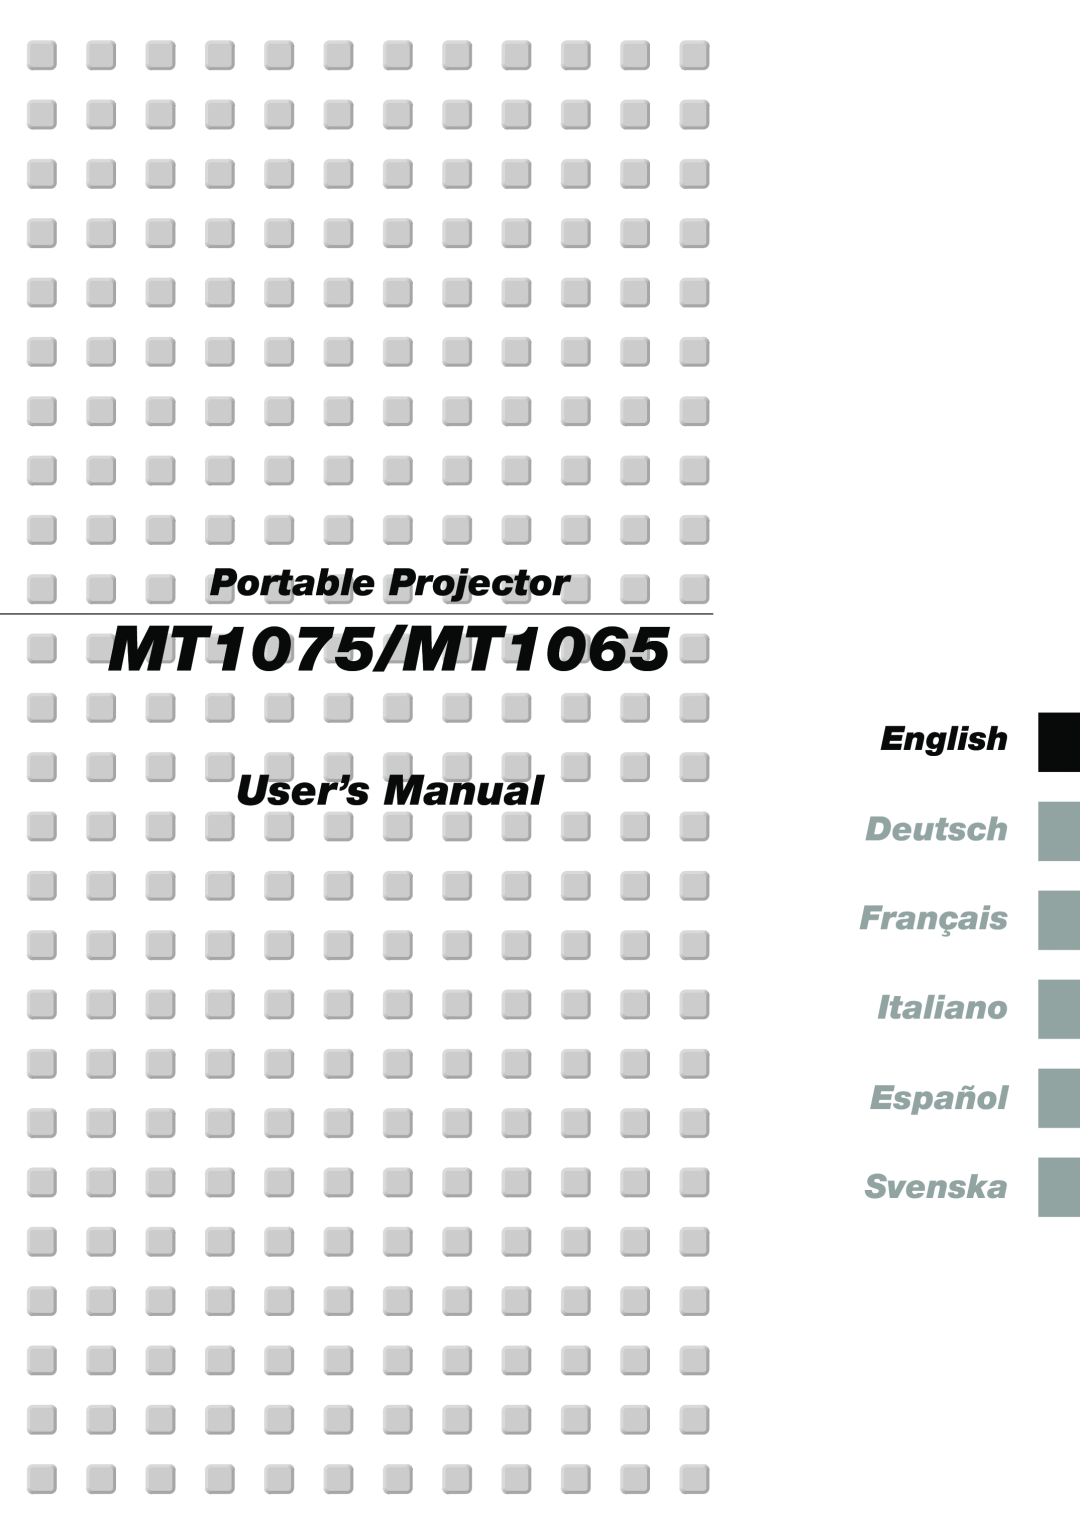 NEC MT1075/MT1065 user manual User’s Manual, Portable Projector, English, Deutsch Français Italiano Español Svenska 